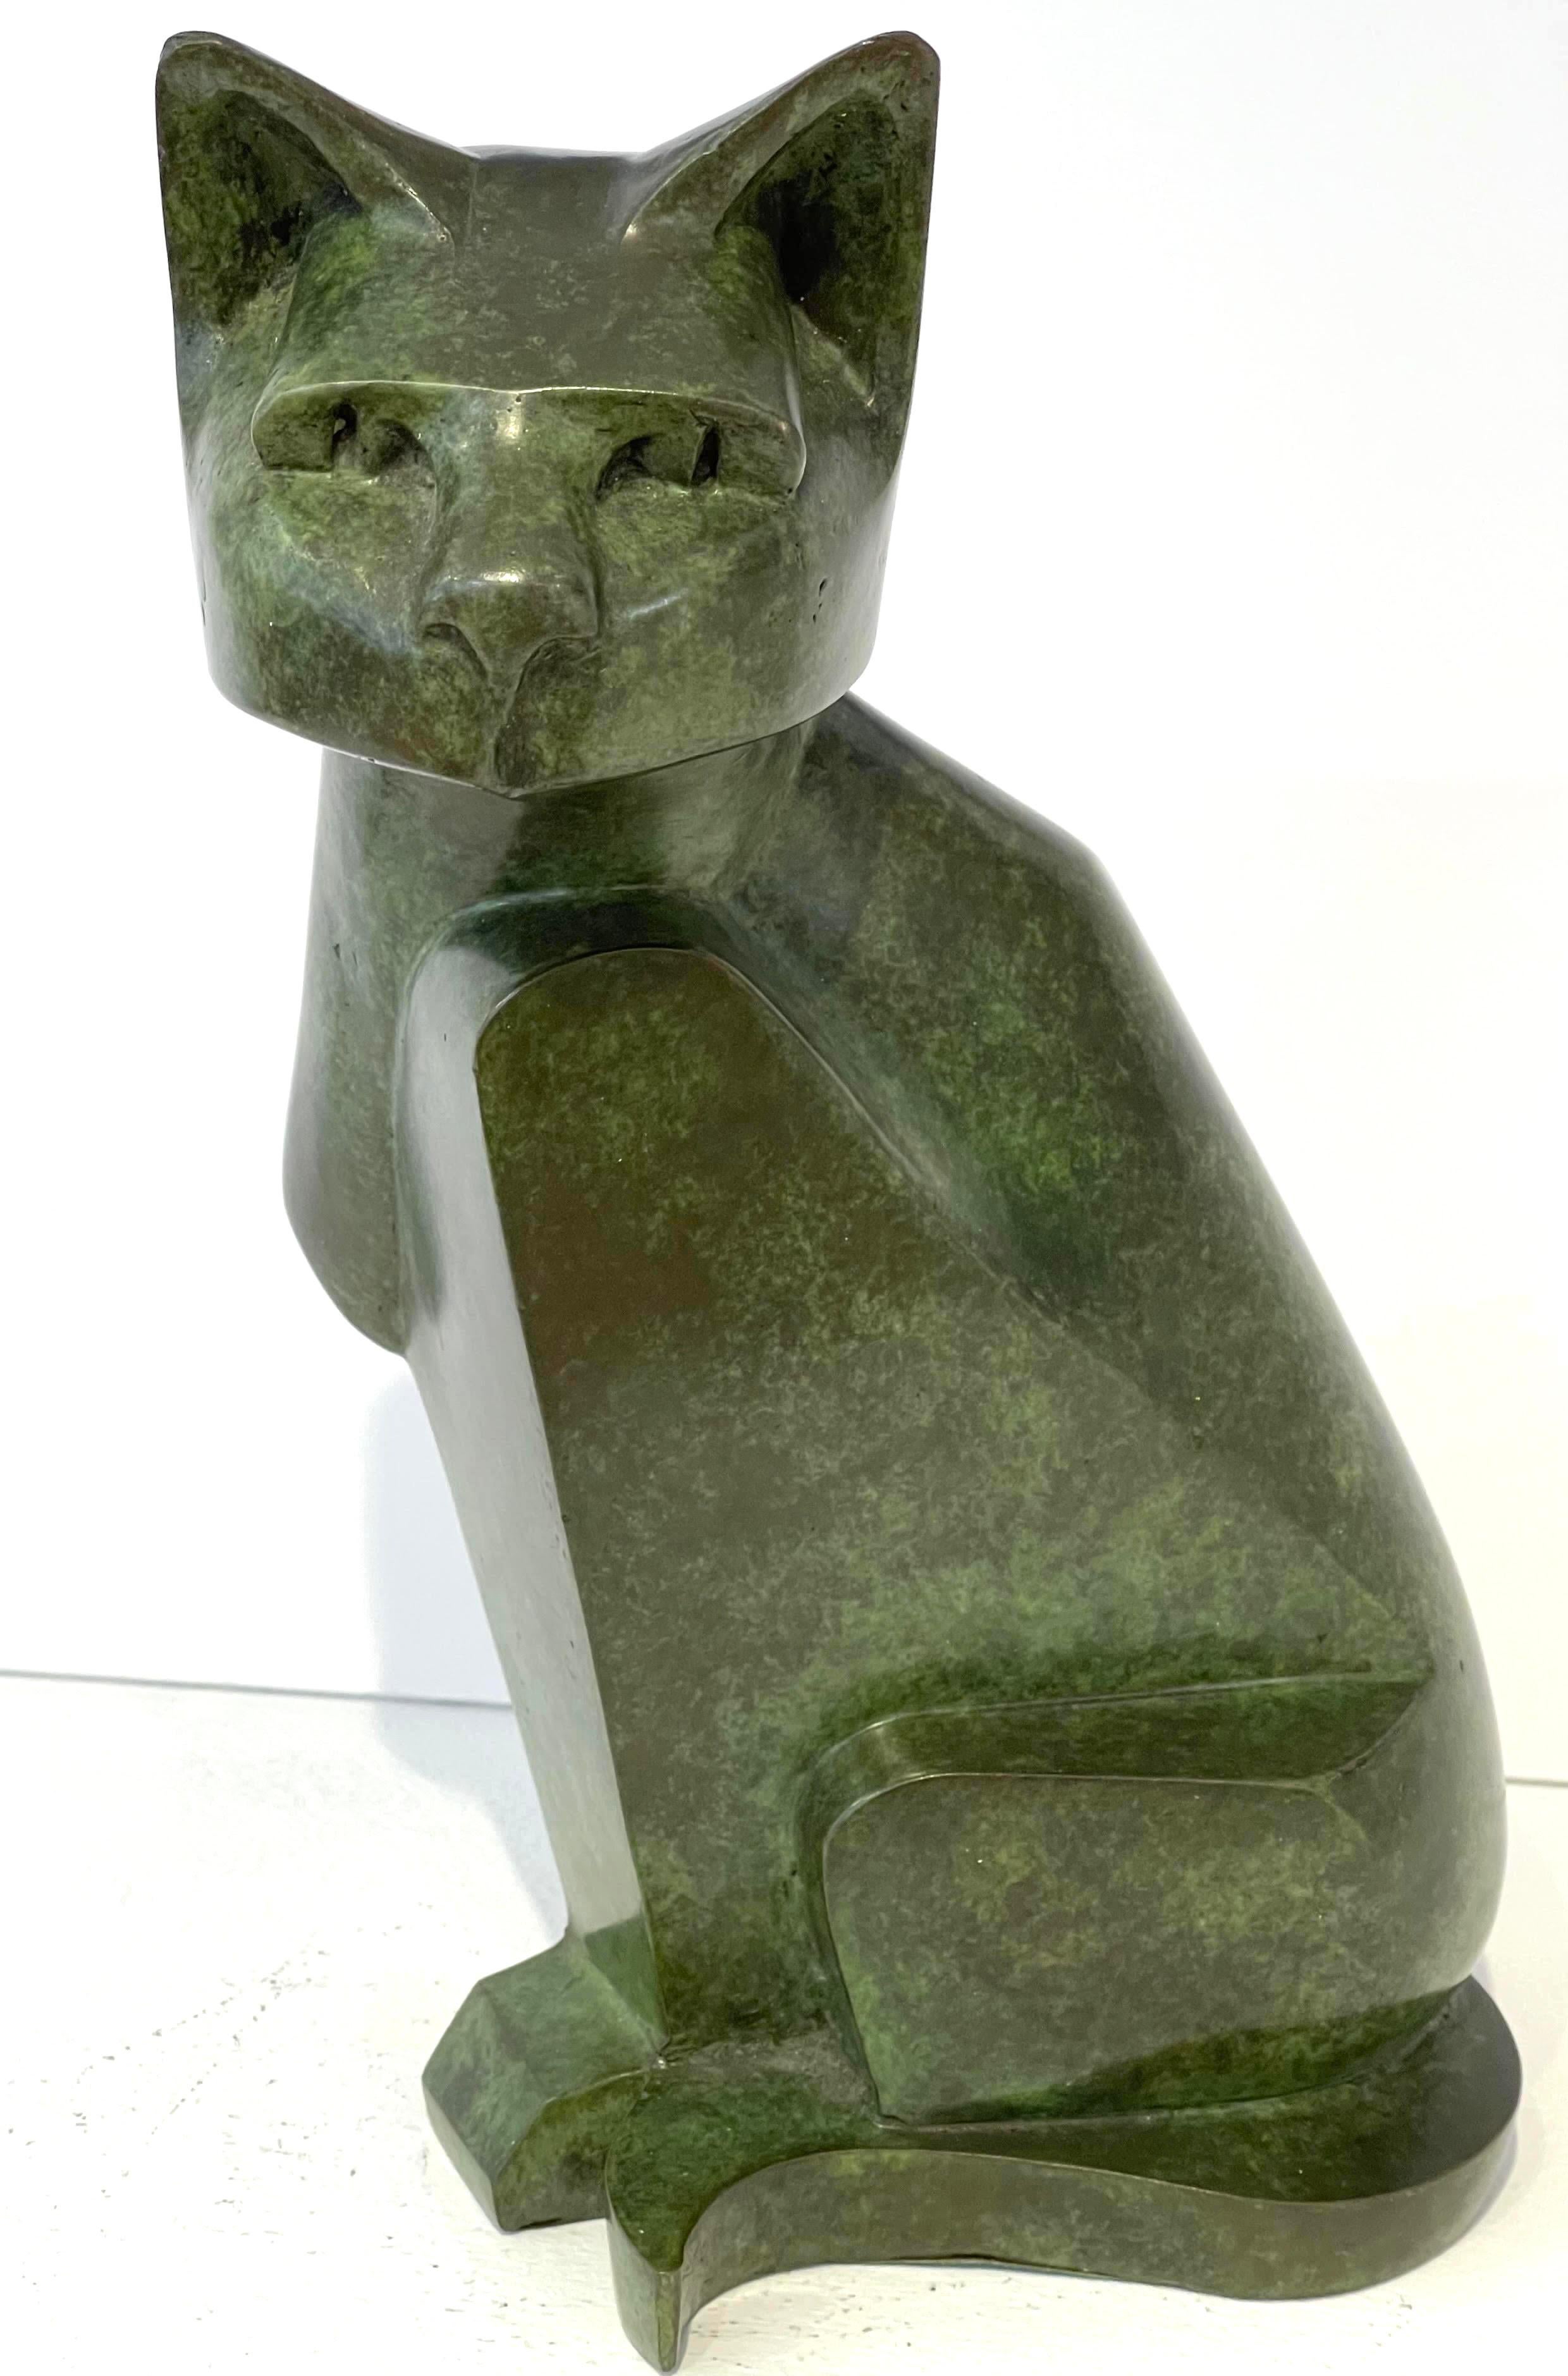 CAT Catalogue Raisonne Ref: Knight, CR-406 cast bronze sculpture by famed artist - Sculpture by Gerald Laing